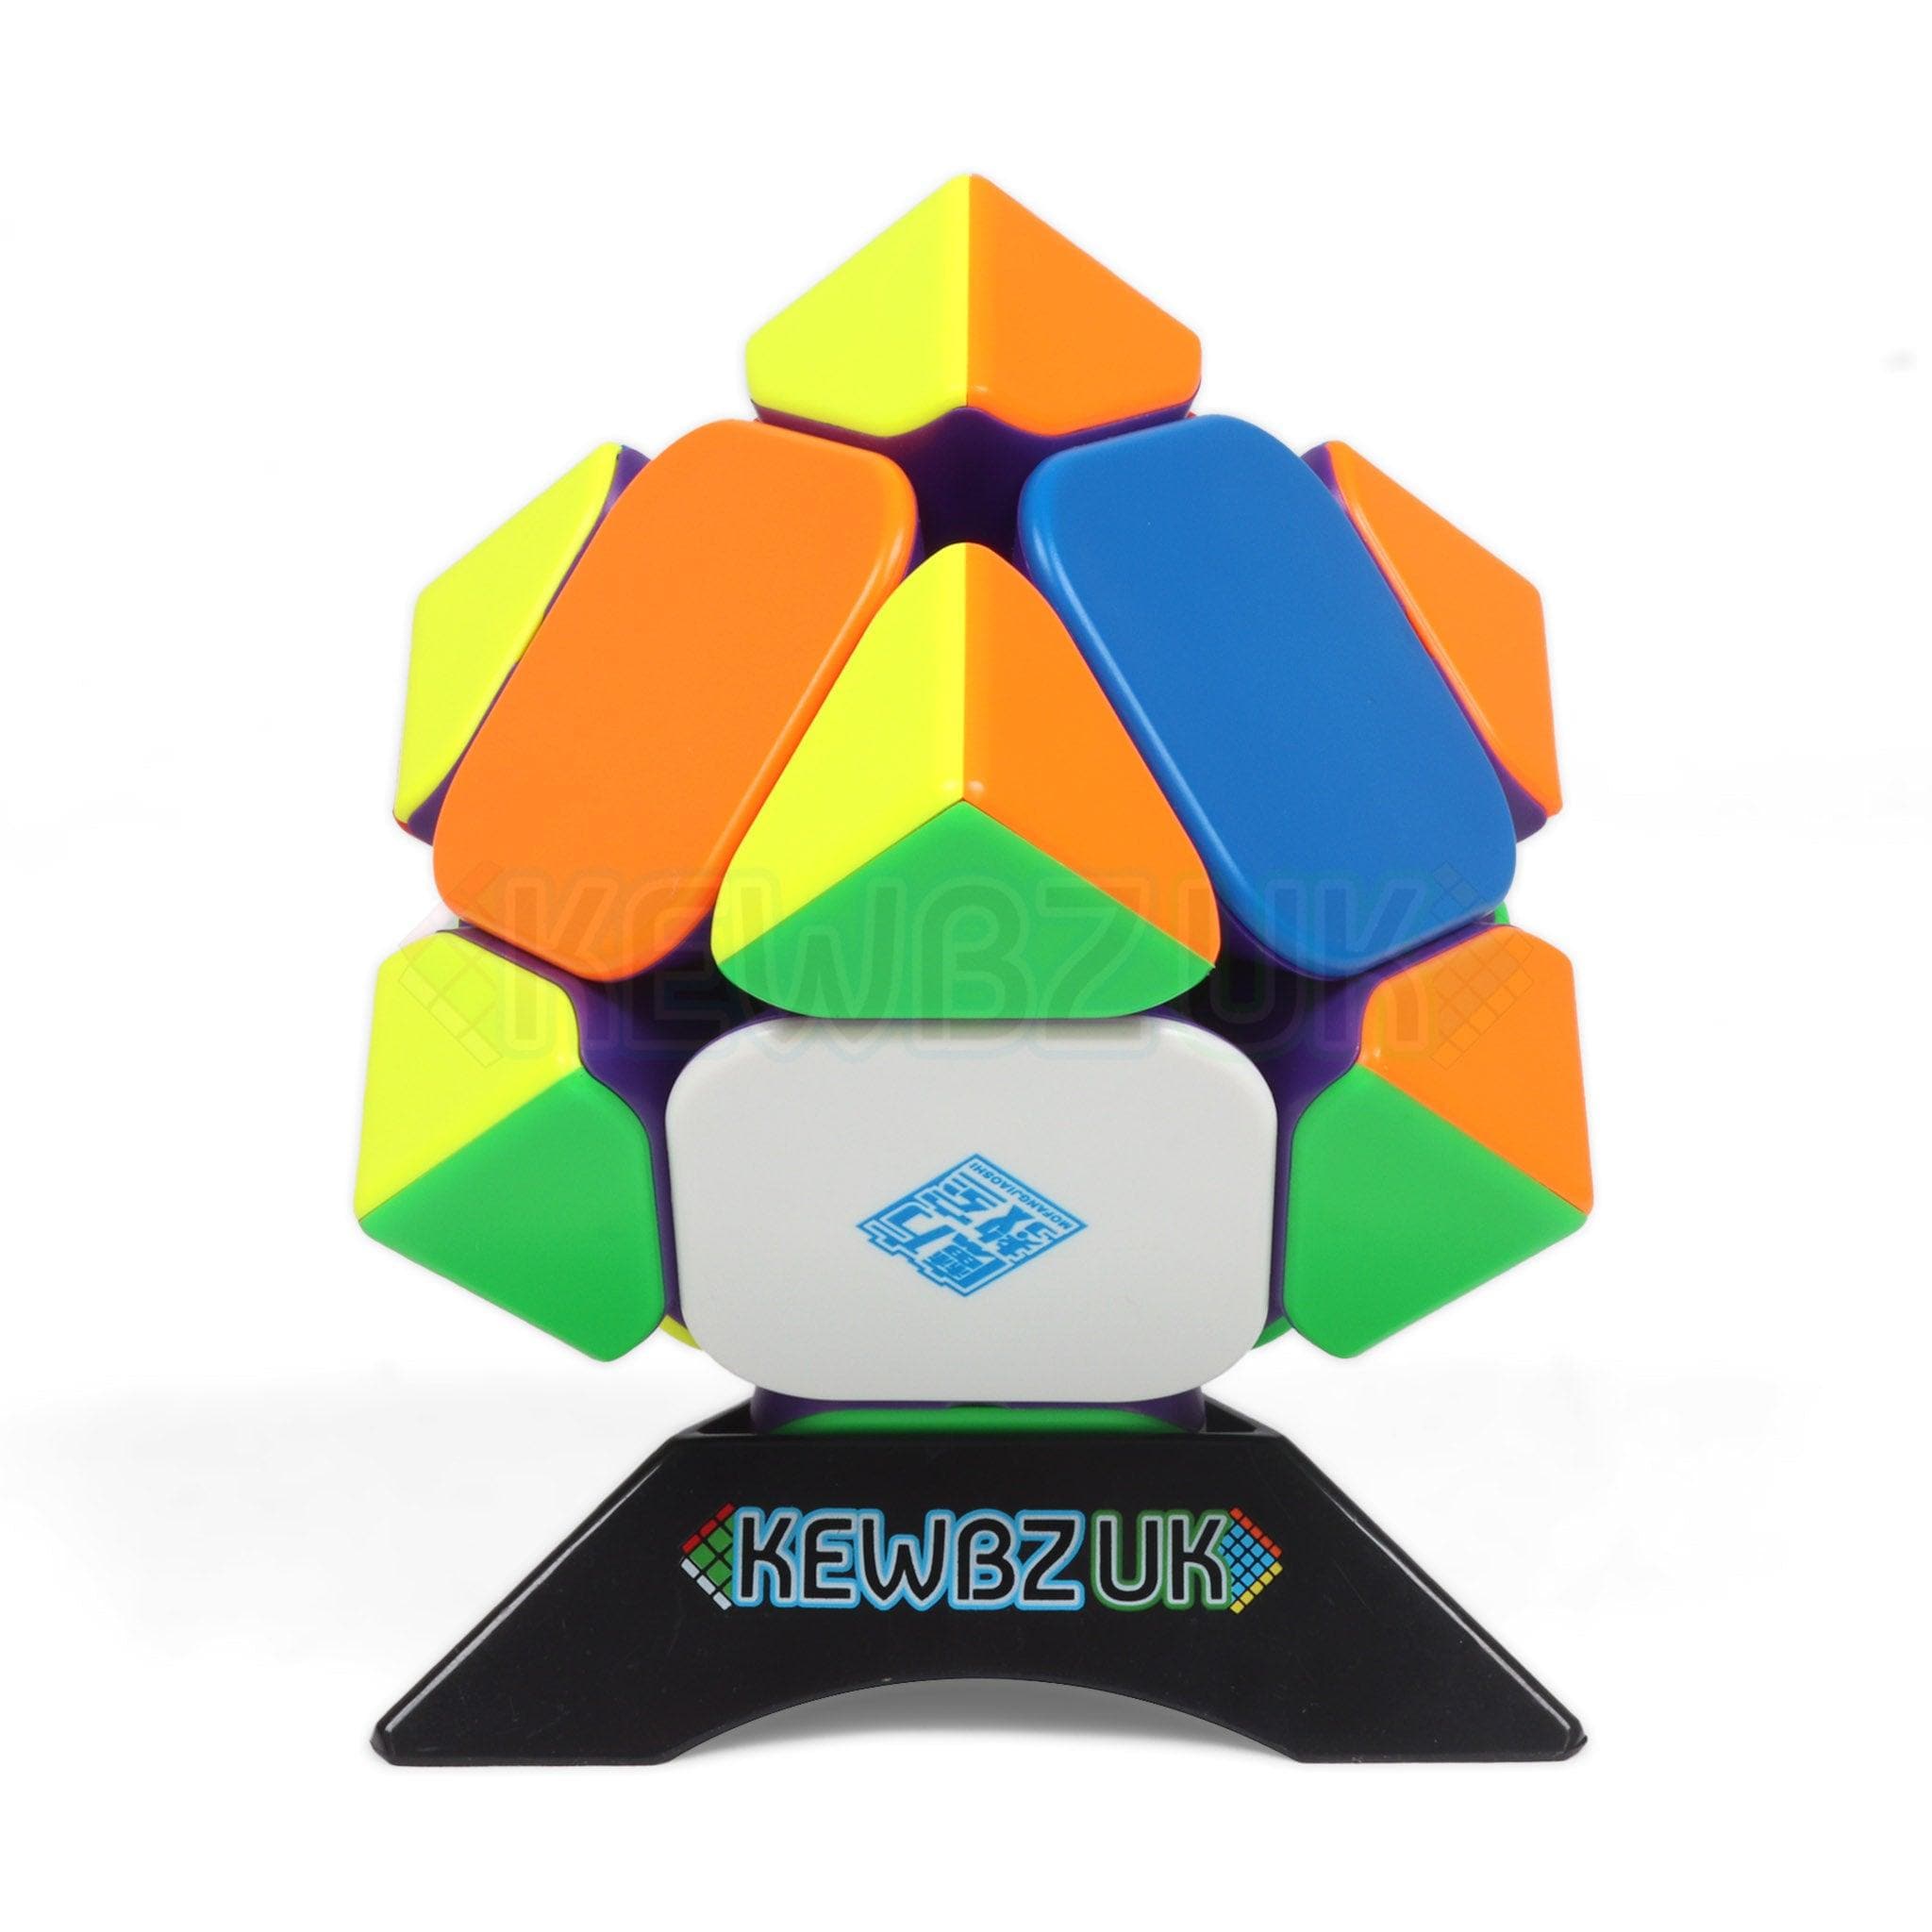 MoFang JiaoShi RS Magnetic Pyraminx by MoYu